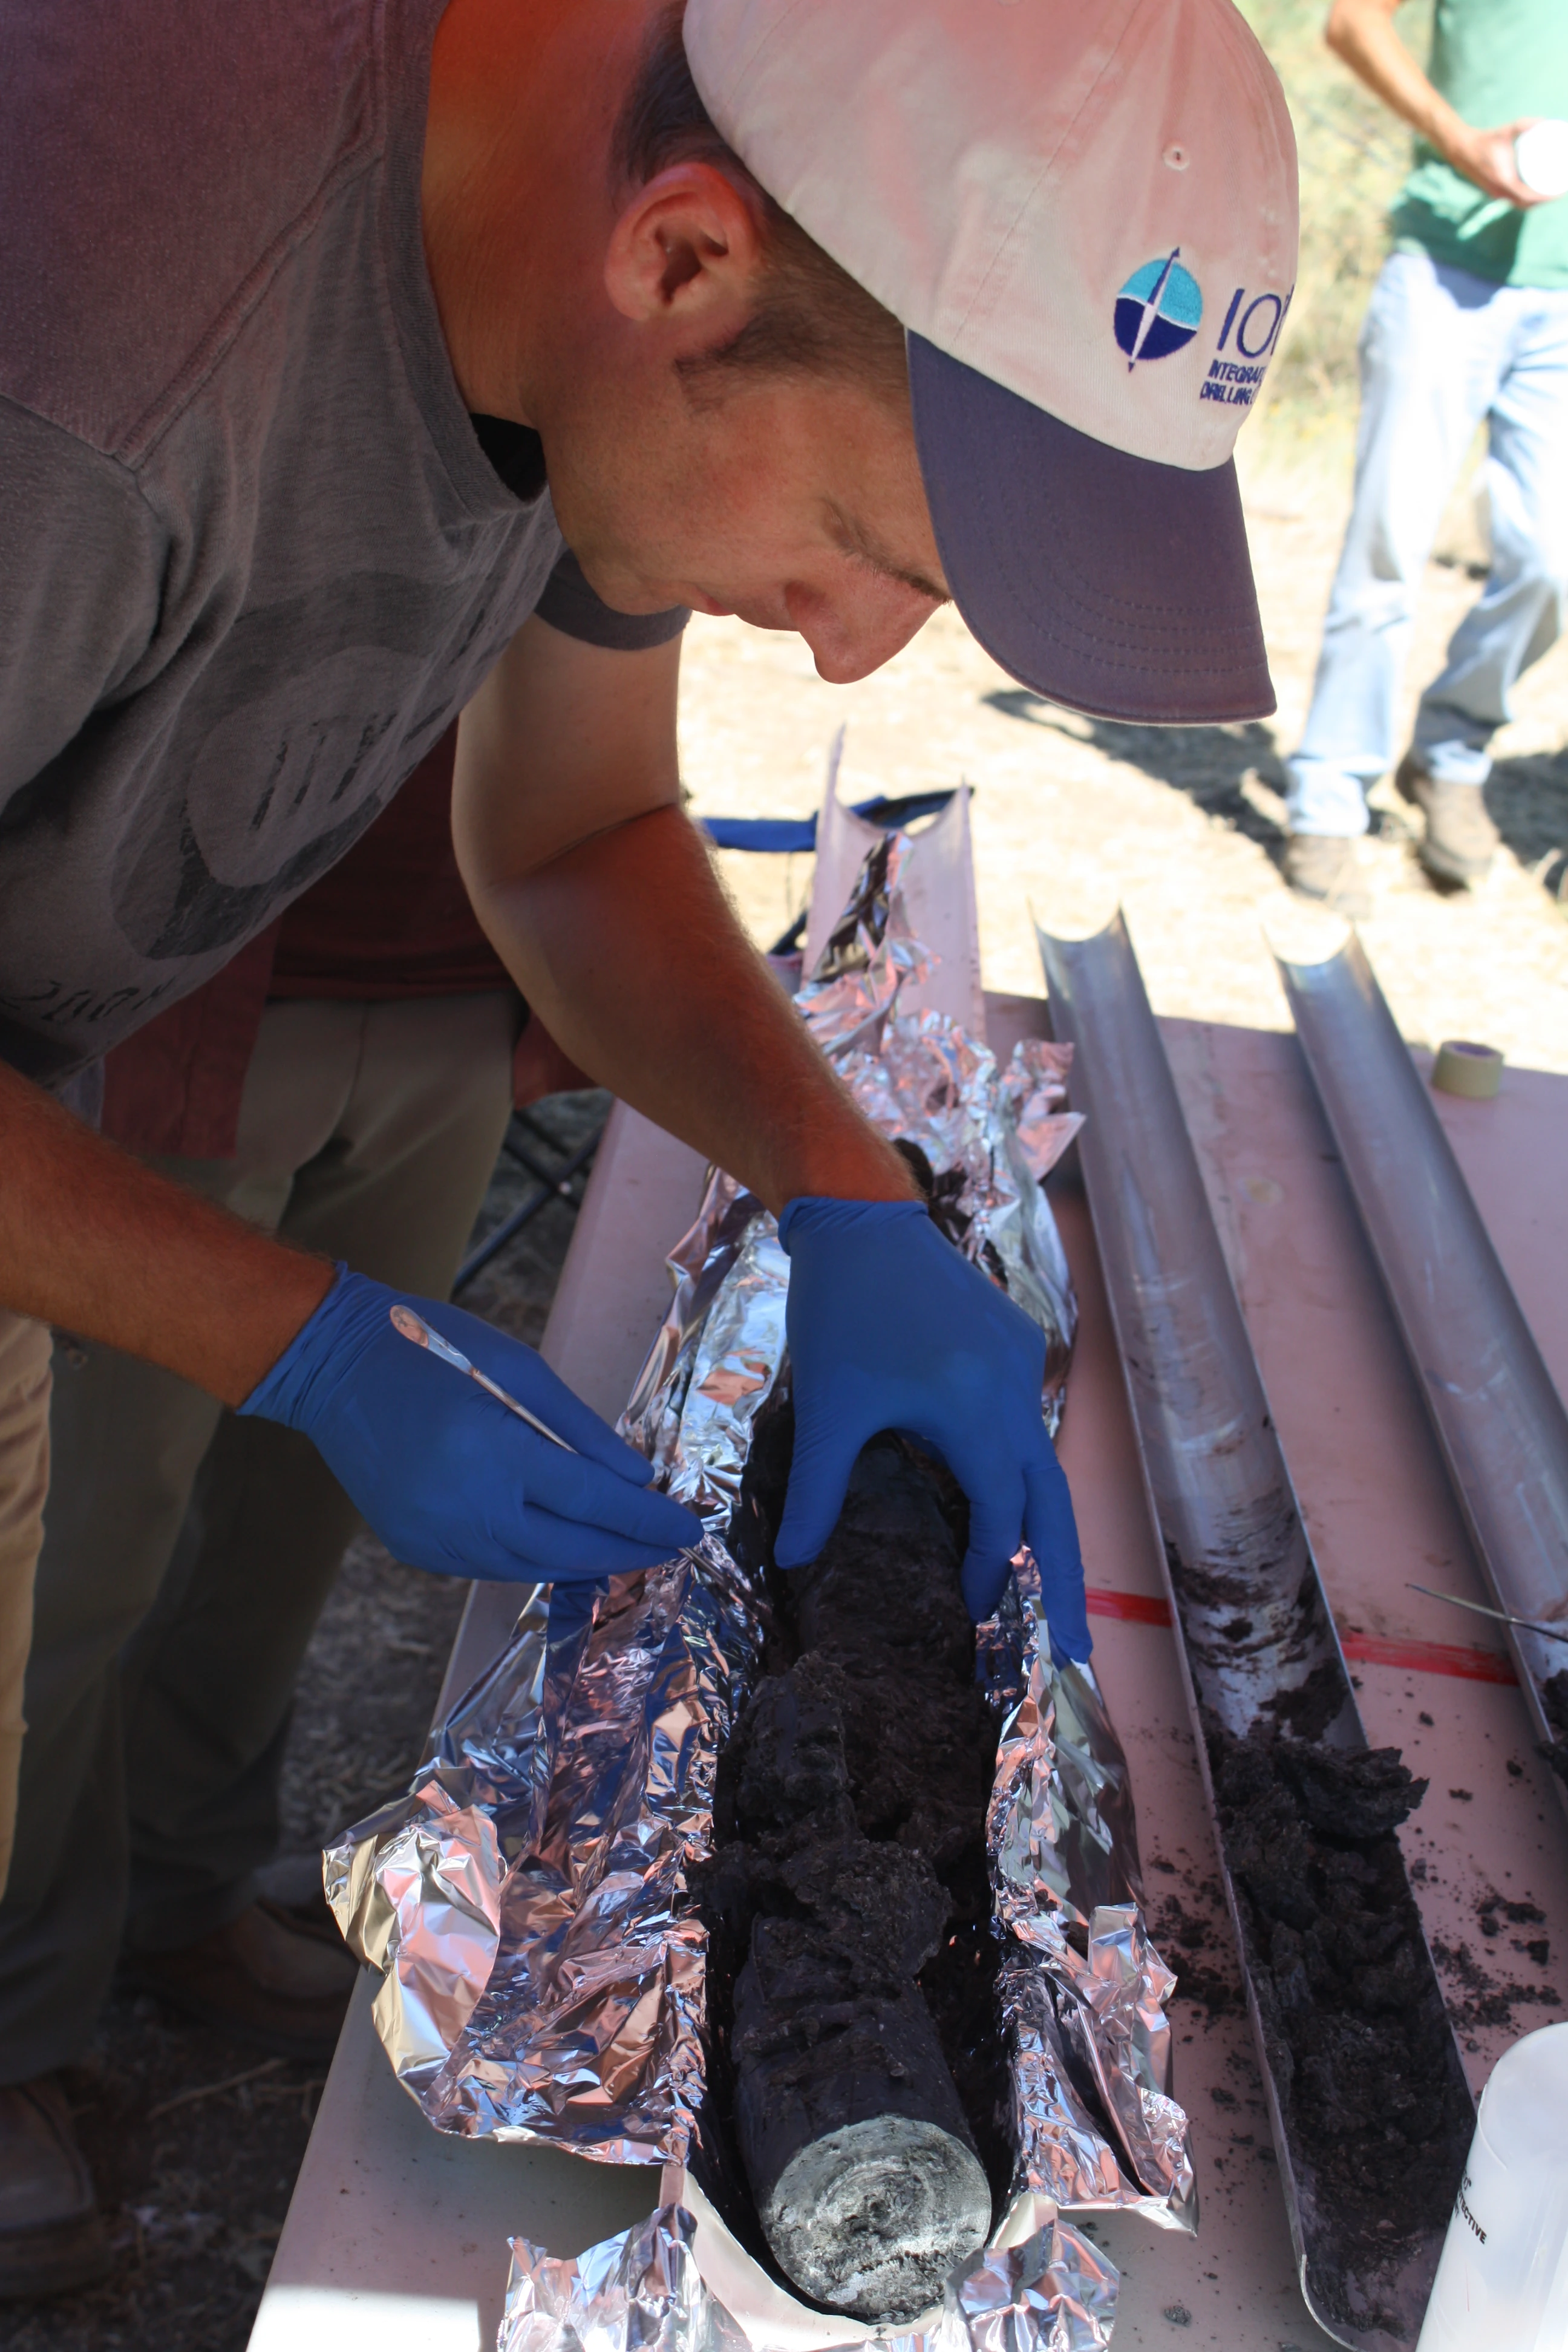 MSU Associate Professor Matthew Schrenk, wearing blue gloves, examines a dark cylindrical sample outdoors at a research site.